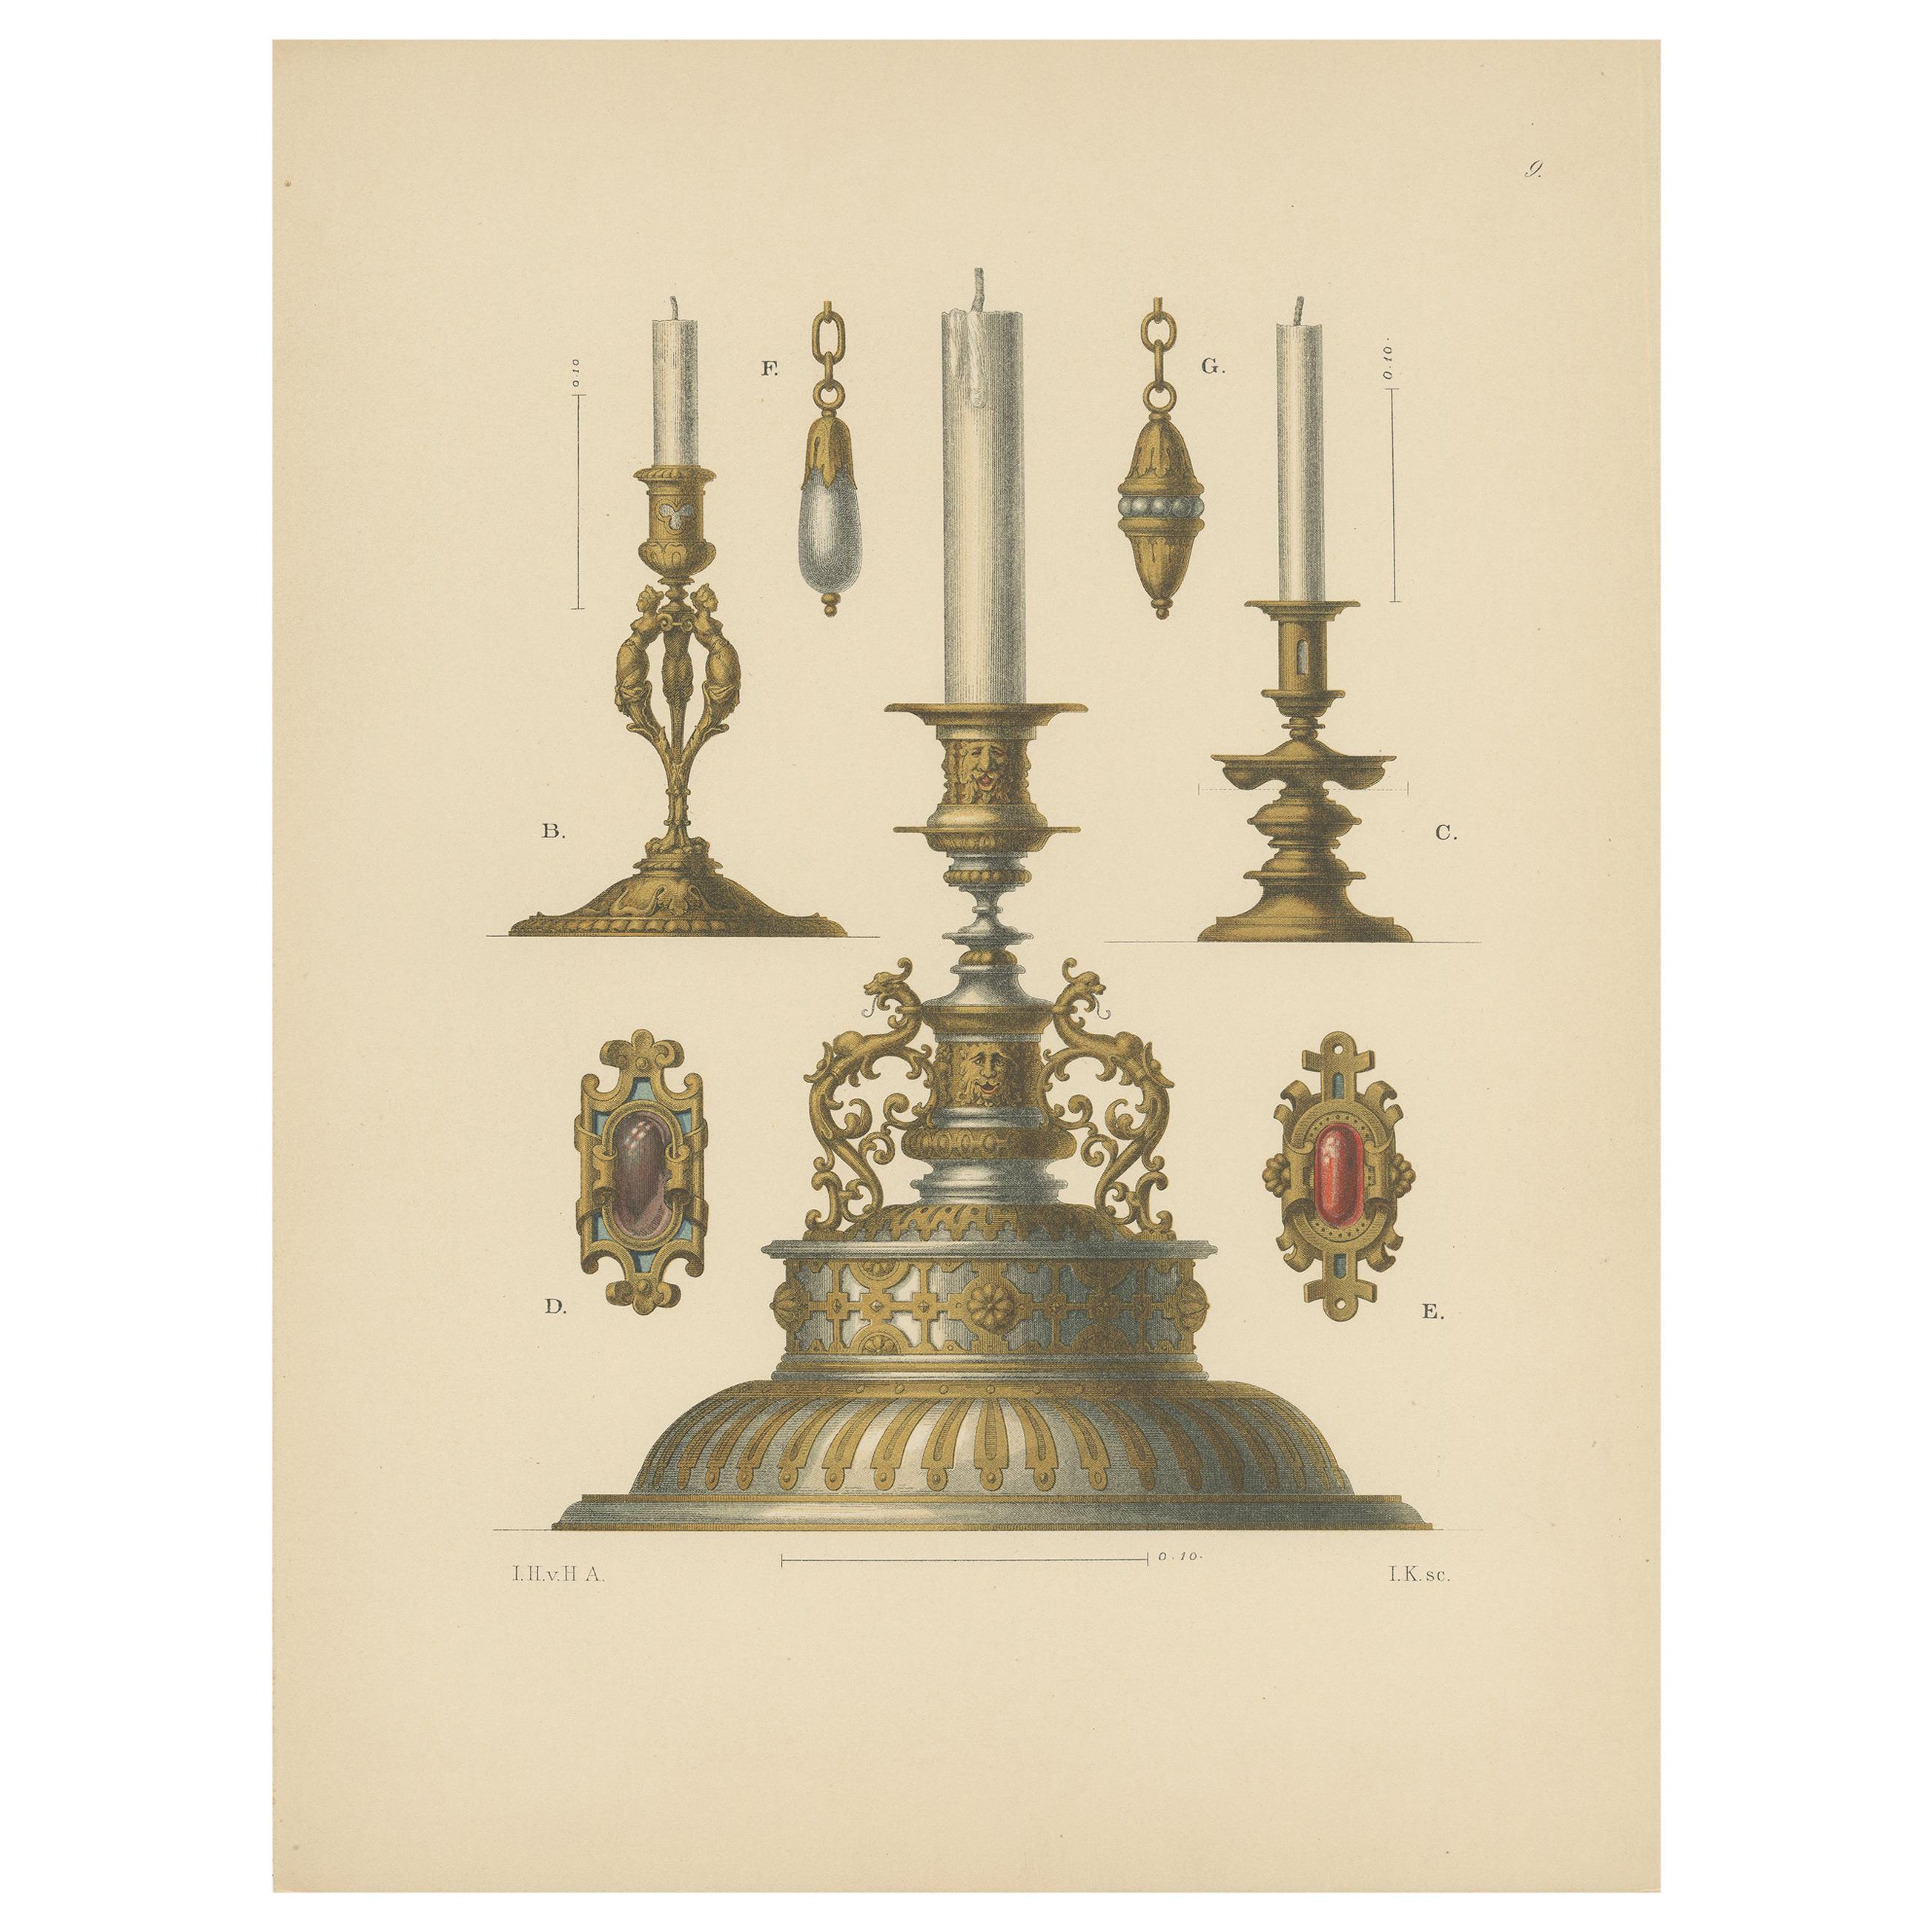 Antique Print of Gold Candleholders by Hefner-Alteneck, 1890